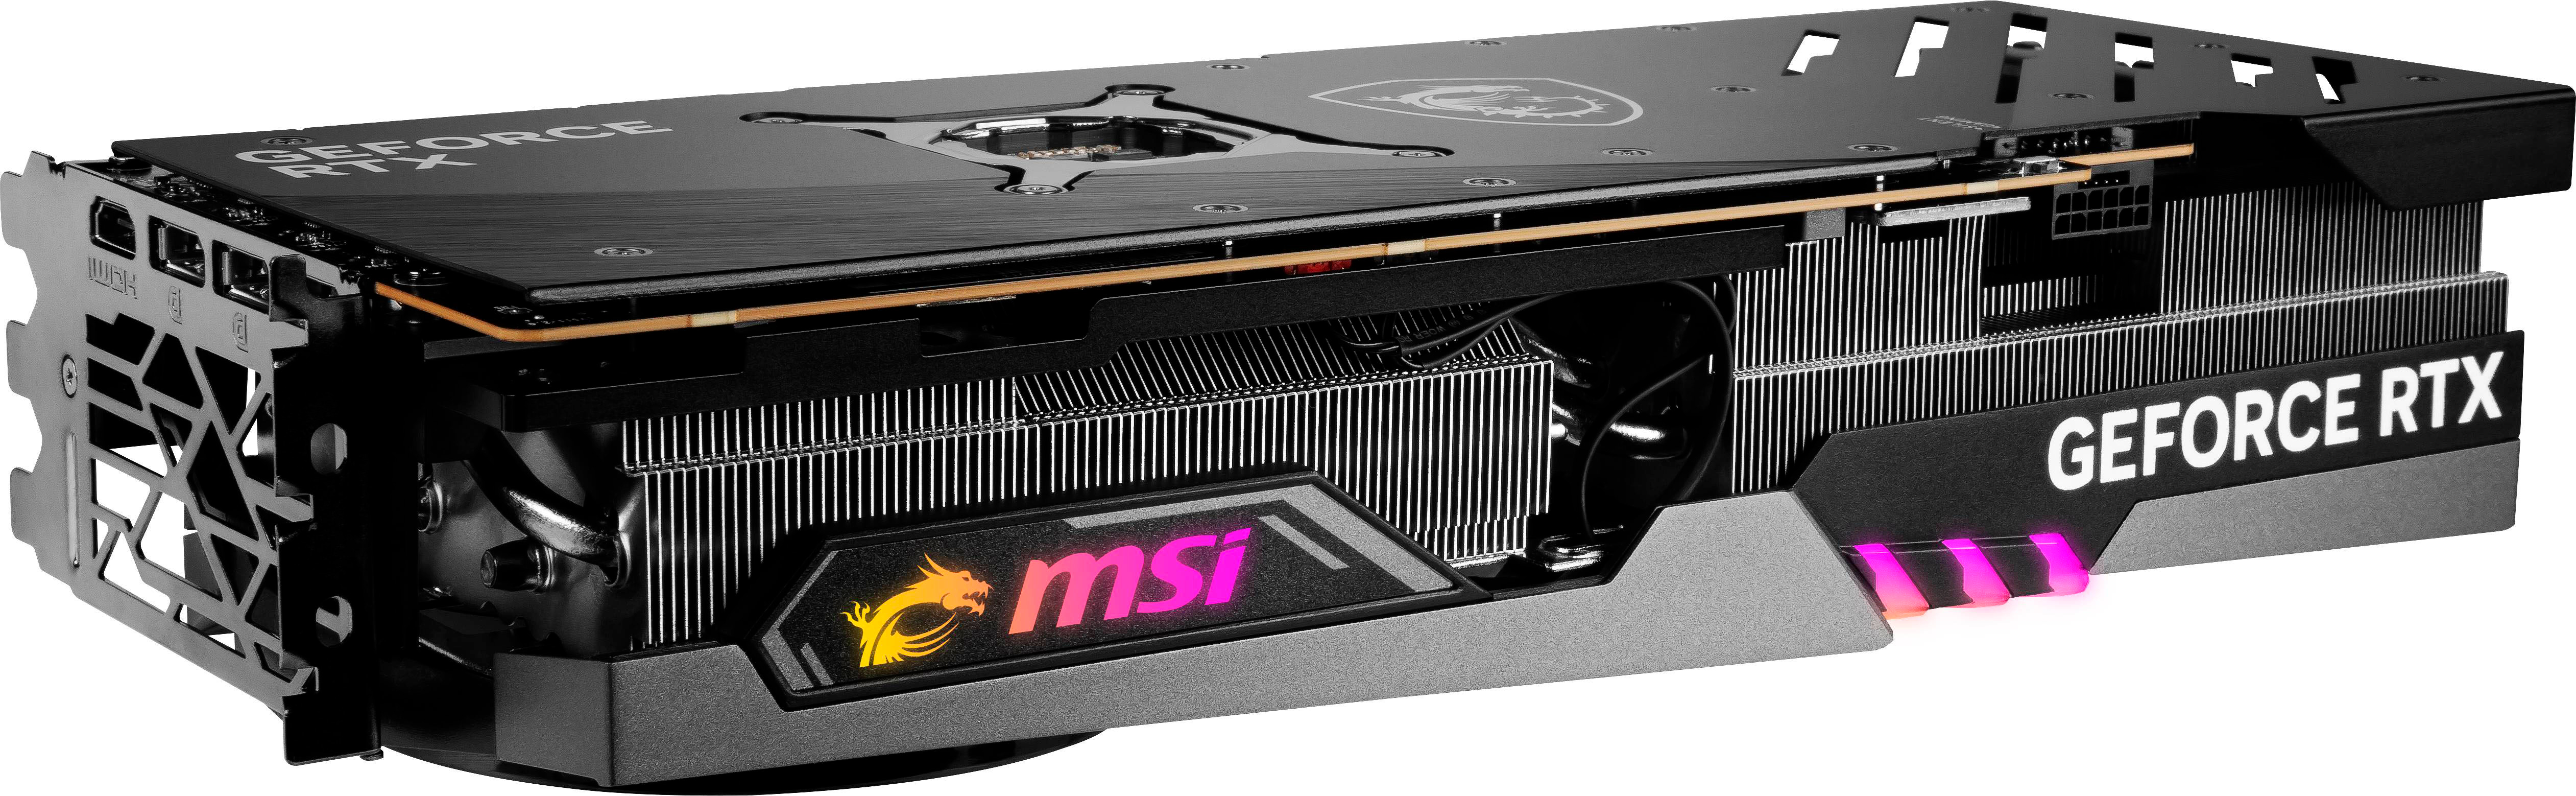 MSI NVIDIA GeForce RTX 4080 16GB GAMING X TRIO Video Cards 22.4 Gbps GDDR6X  256Bit 2610 MHz DeskTop GPU Motherboard Graphic Card